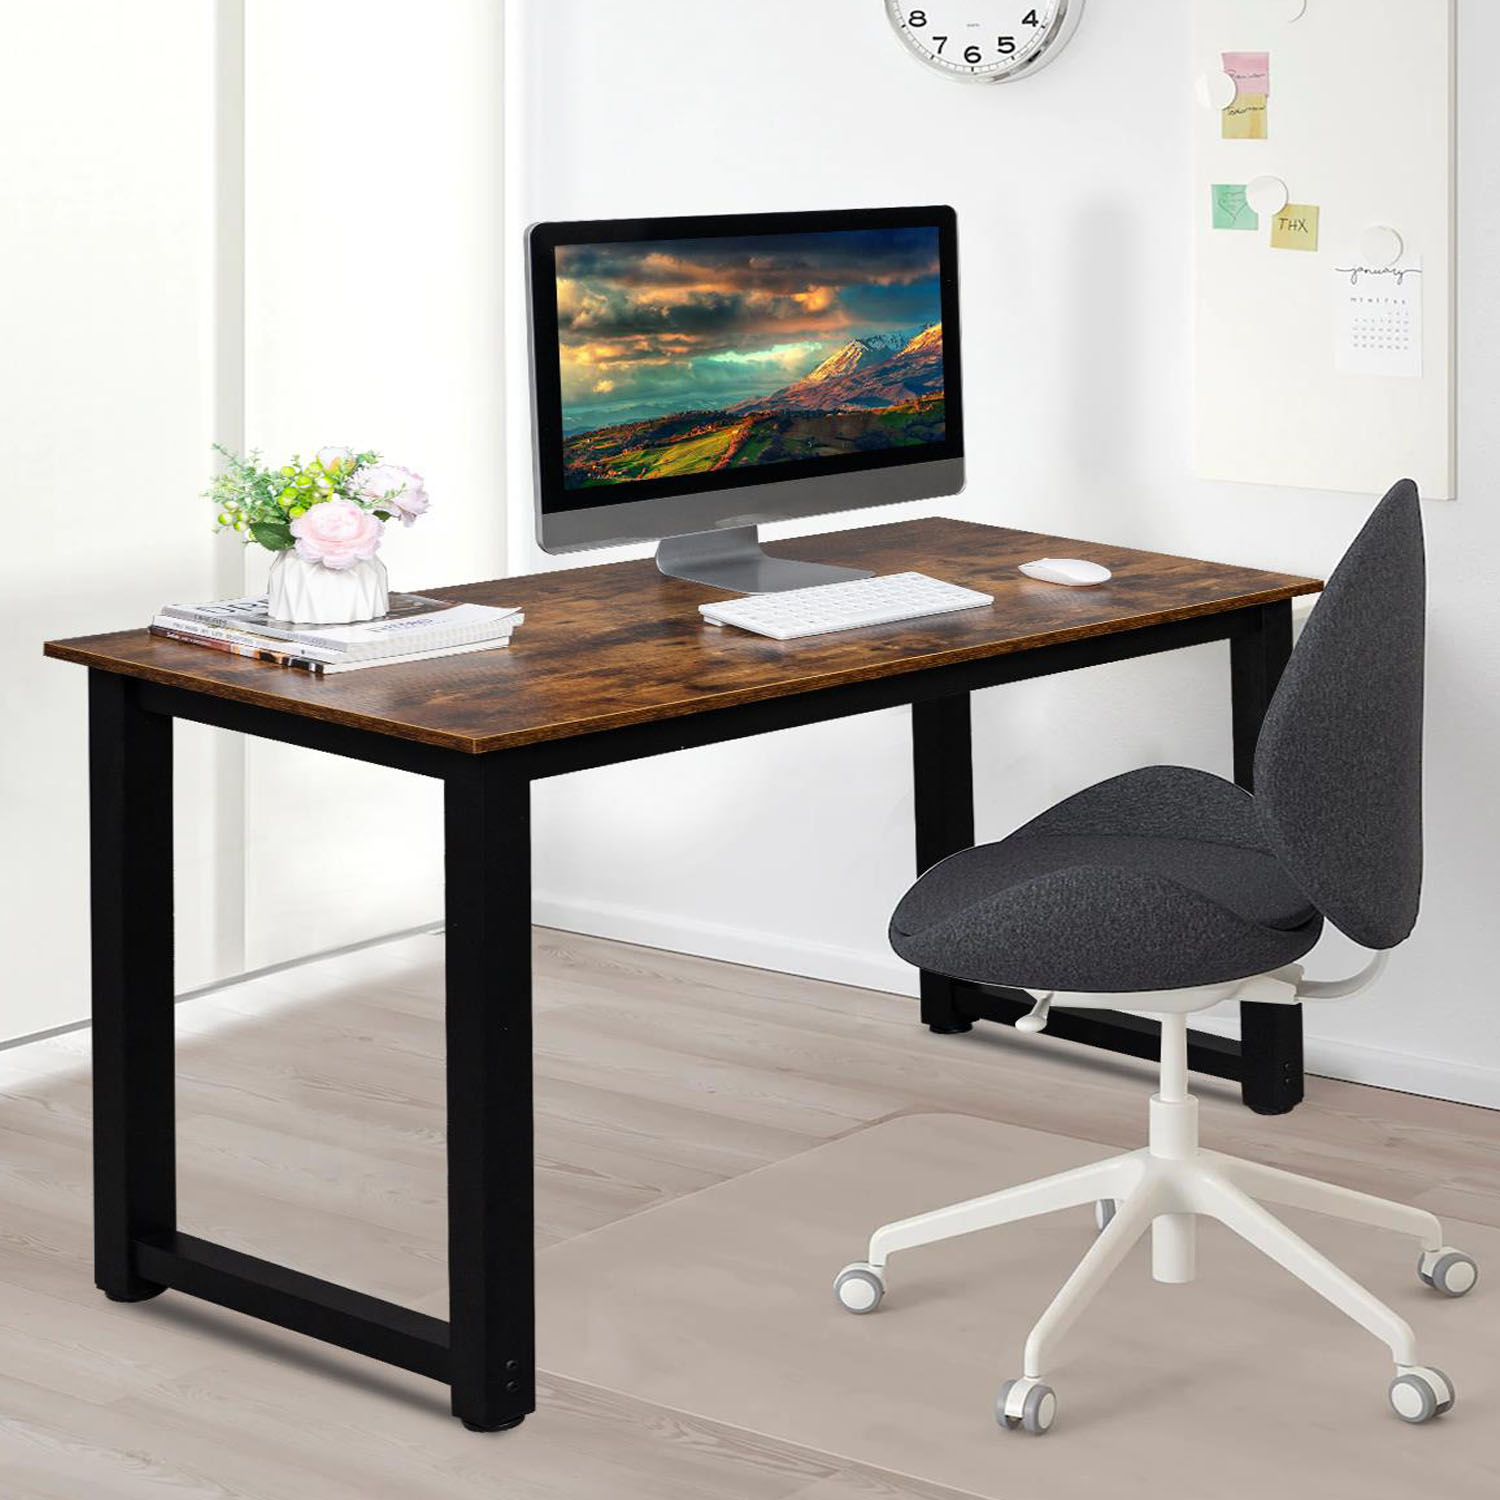 Ktaxon Wood Computer Desk PC Laptop Study Table Workstation Home Office Furniture - image 1 of 13